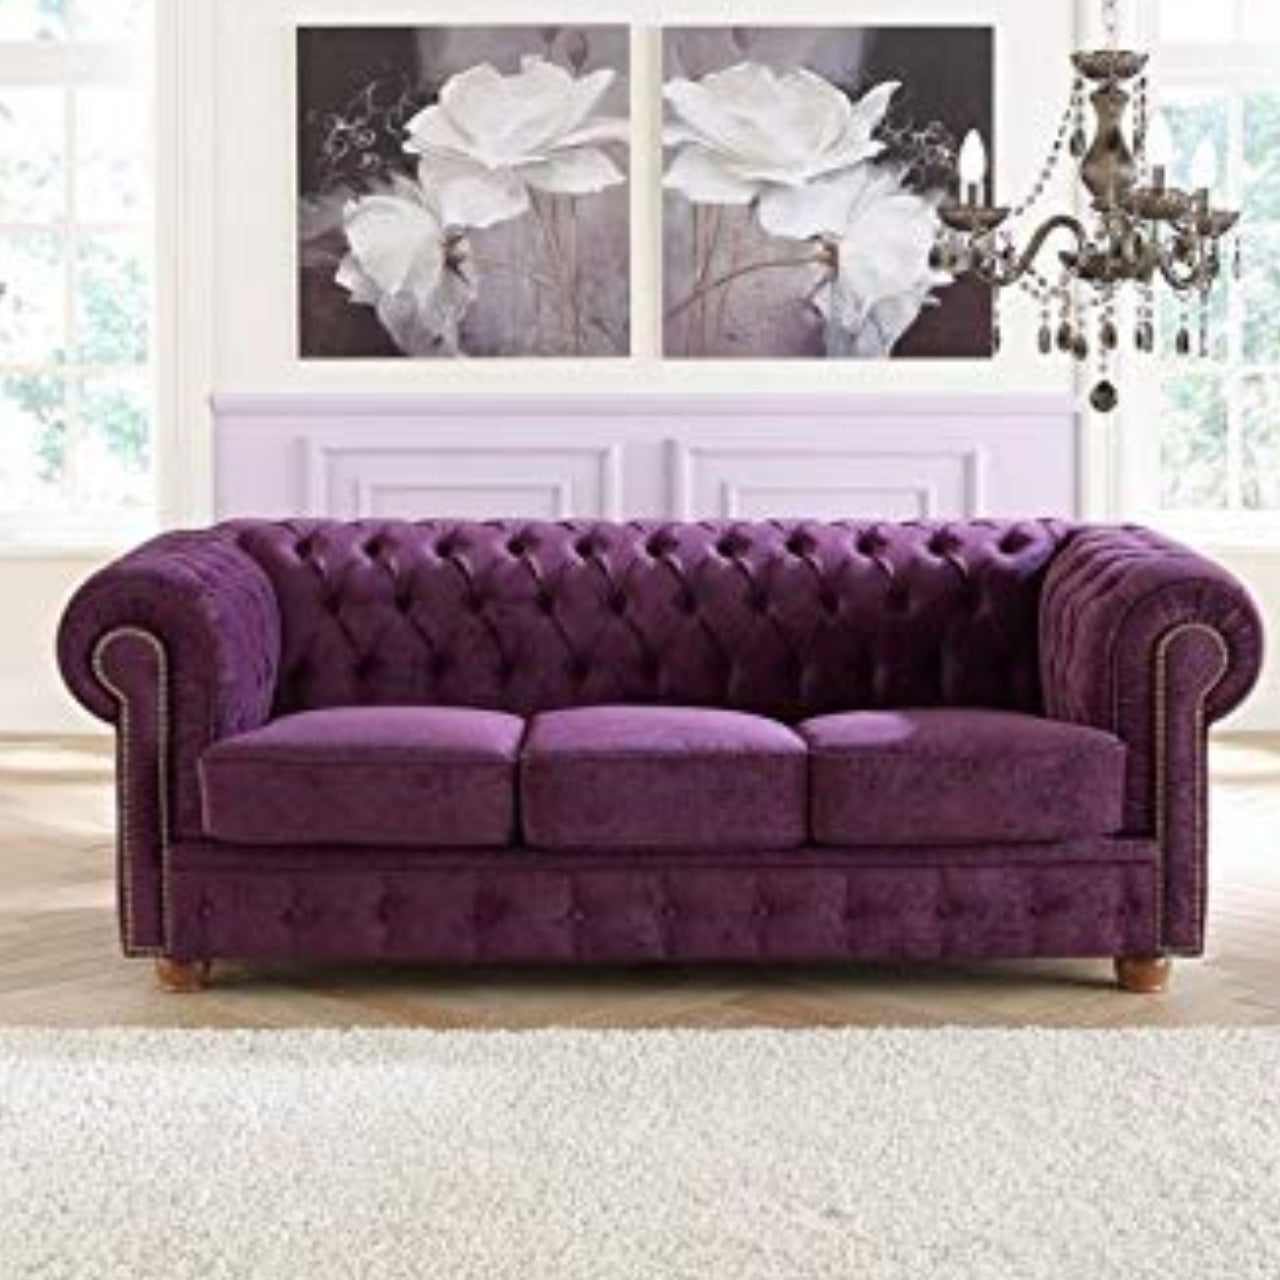 3 Seater Sofa Set- Zoin Velvet Fabric Sofa Set, Standard Size, (Purple)